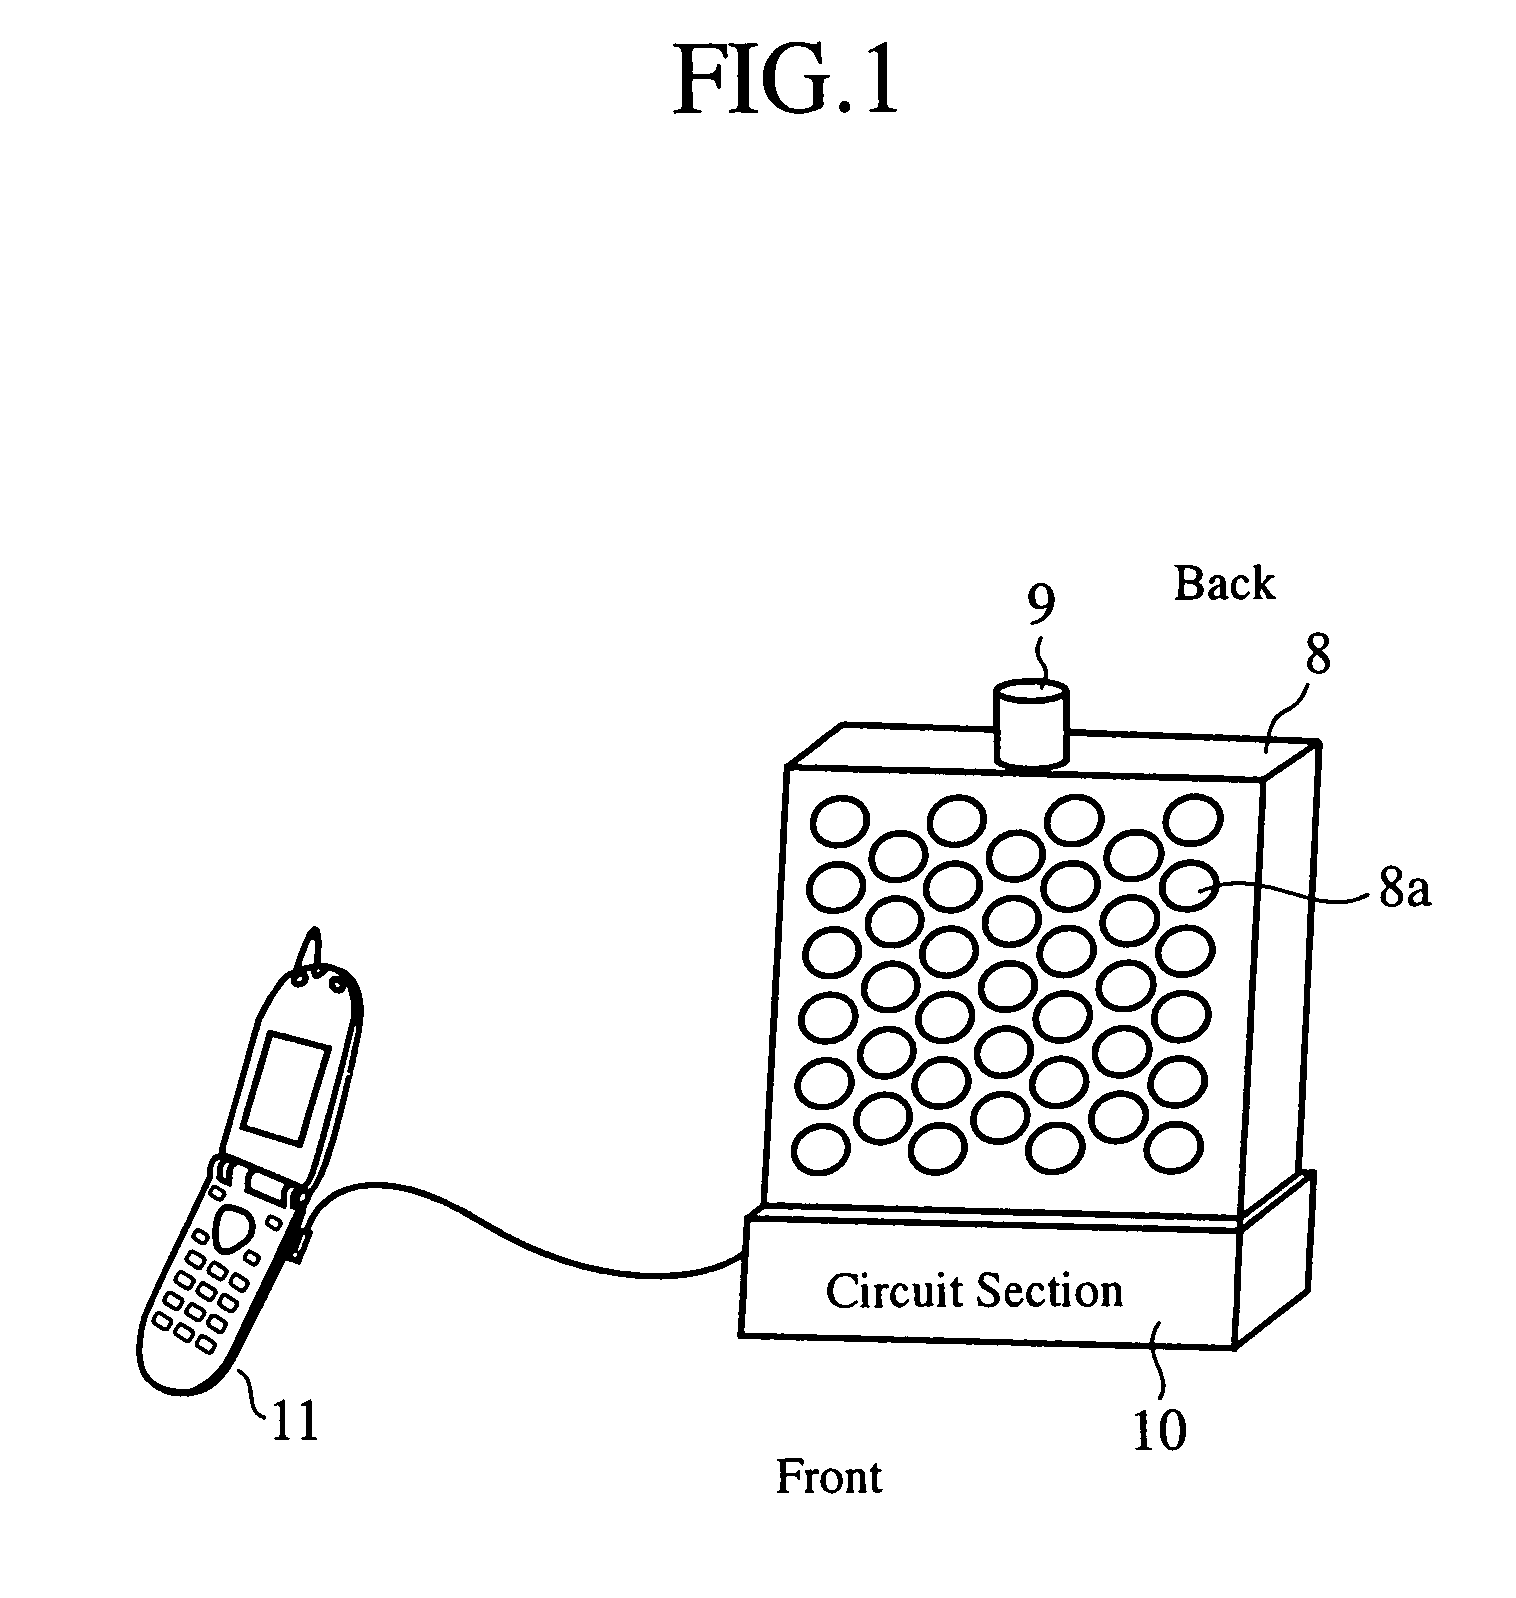 Acoustic apparatus and telephone conversation apparatus